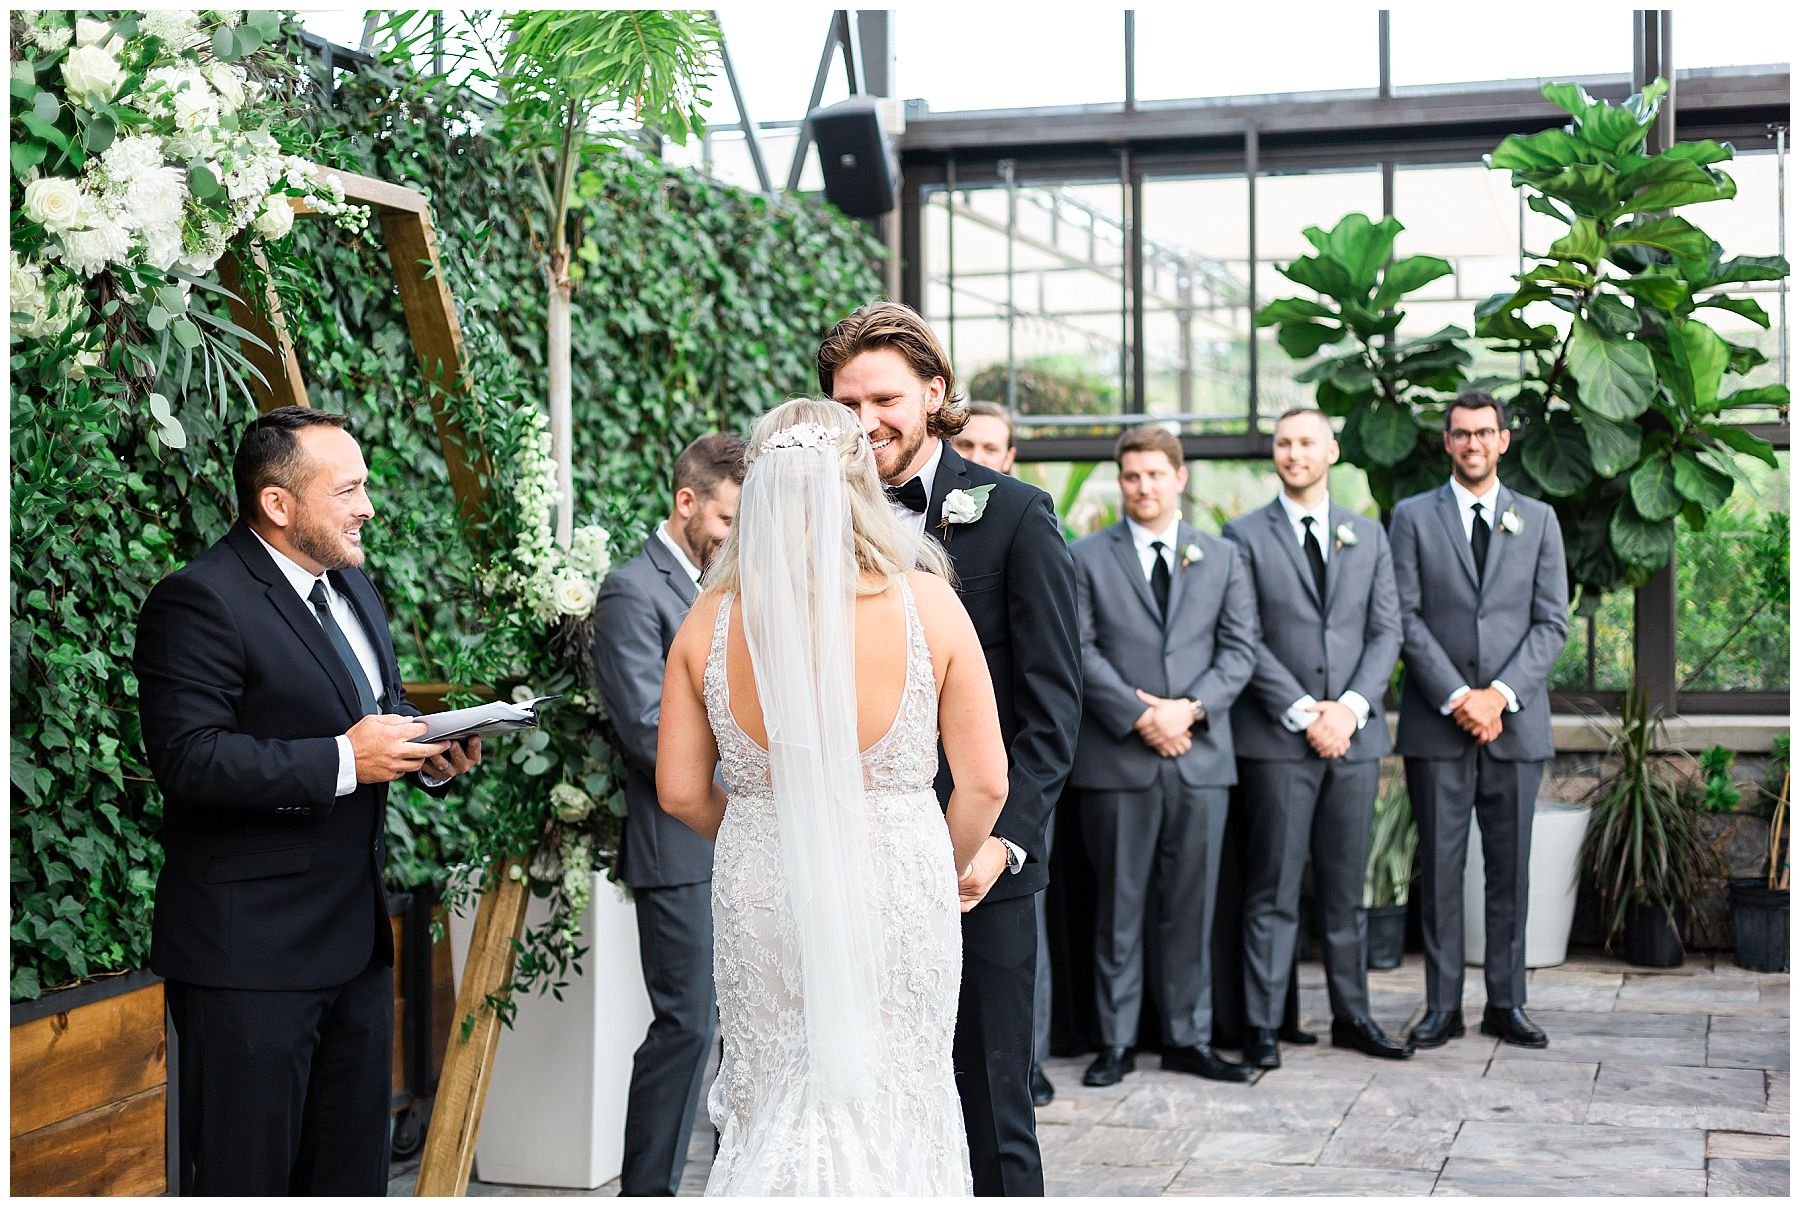 Classic black tie wedding at Aquatopia conservatory 